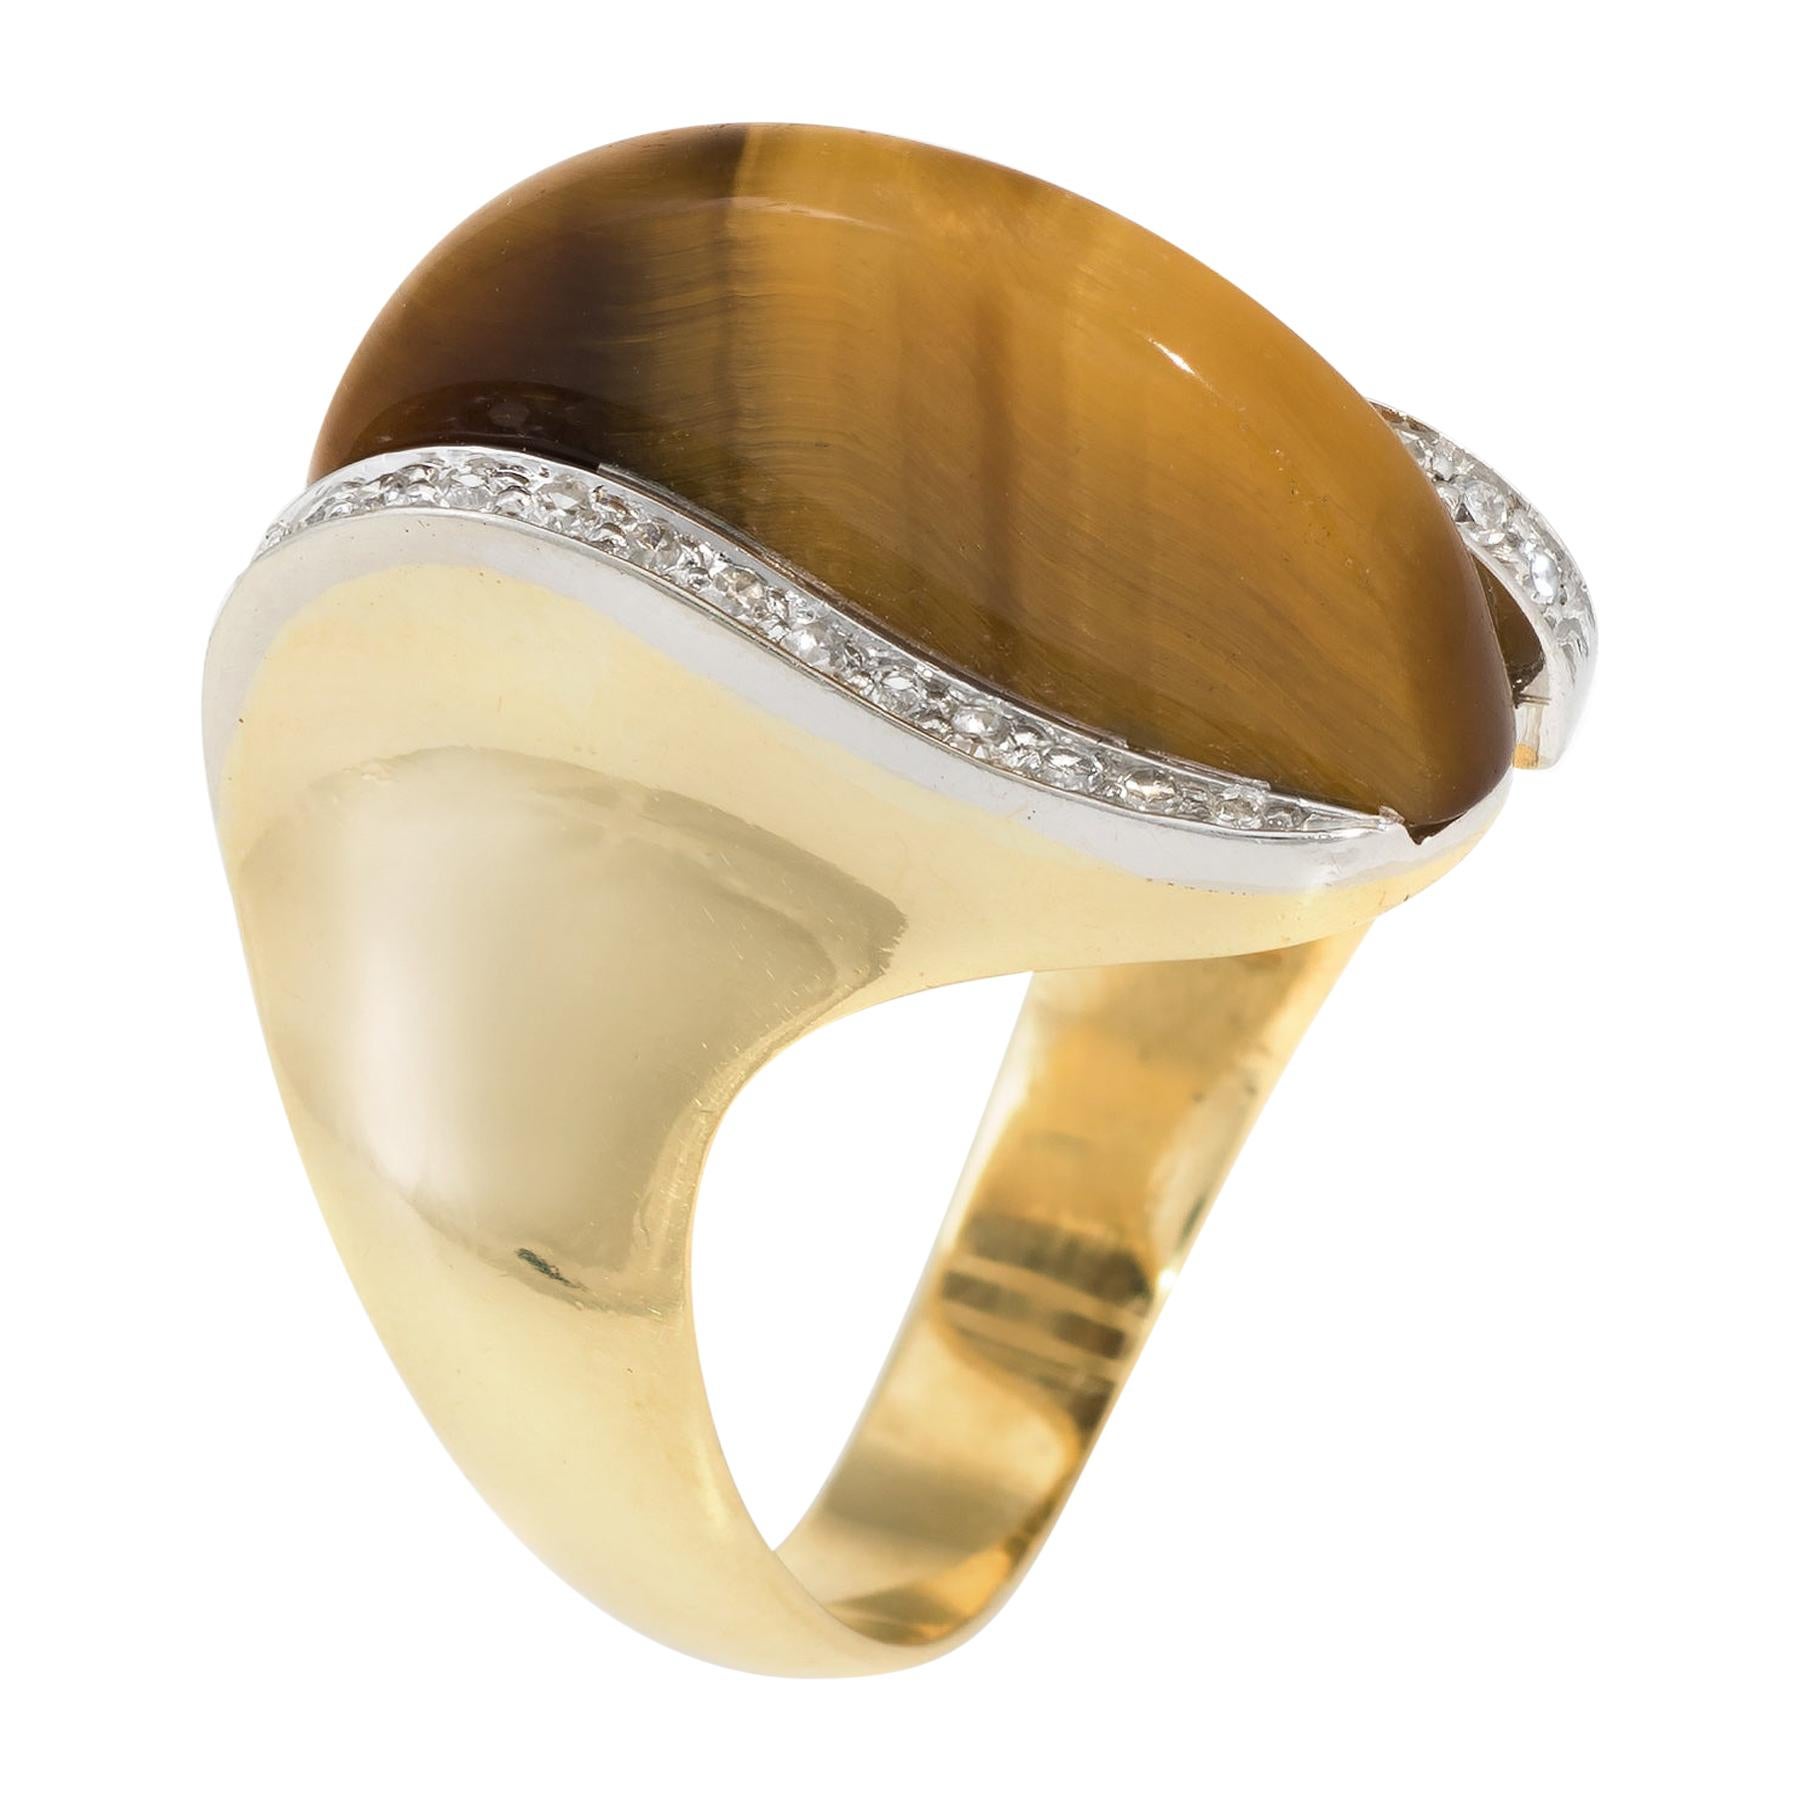 1970s Tigers Eye Diamond Cocktail Ring Vintage 18 Karat Gold Estate Jewelry